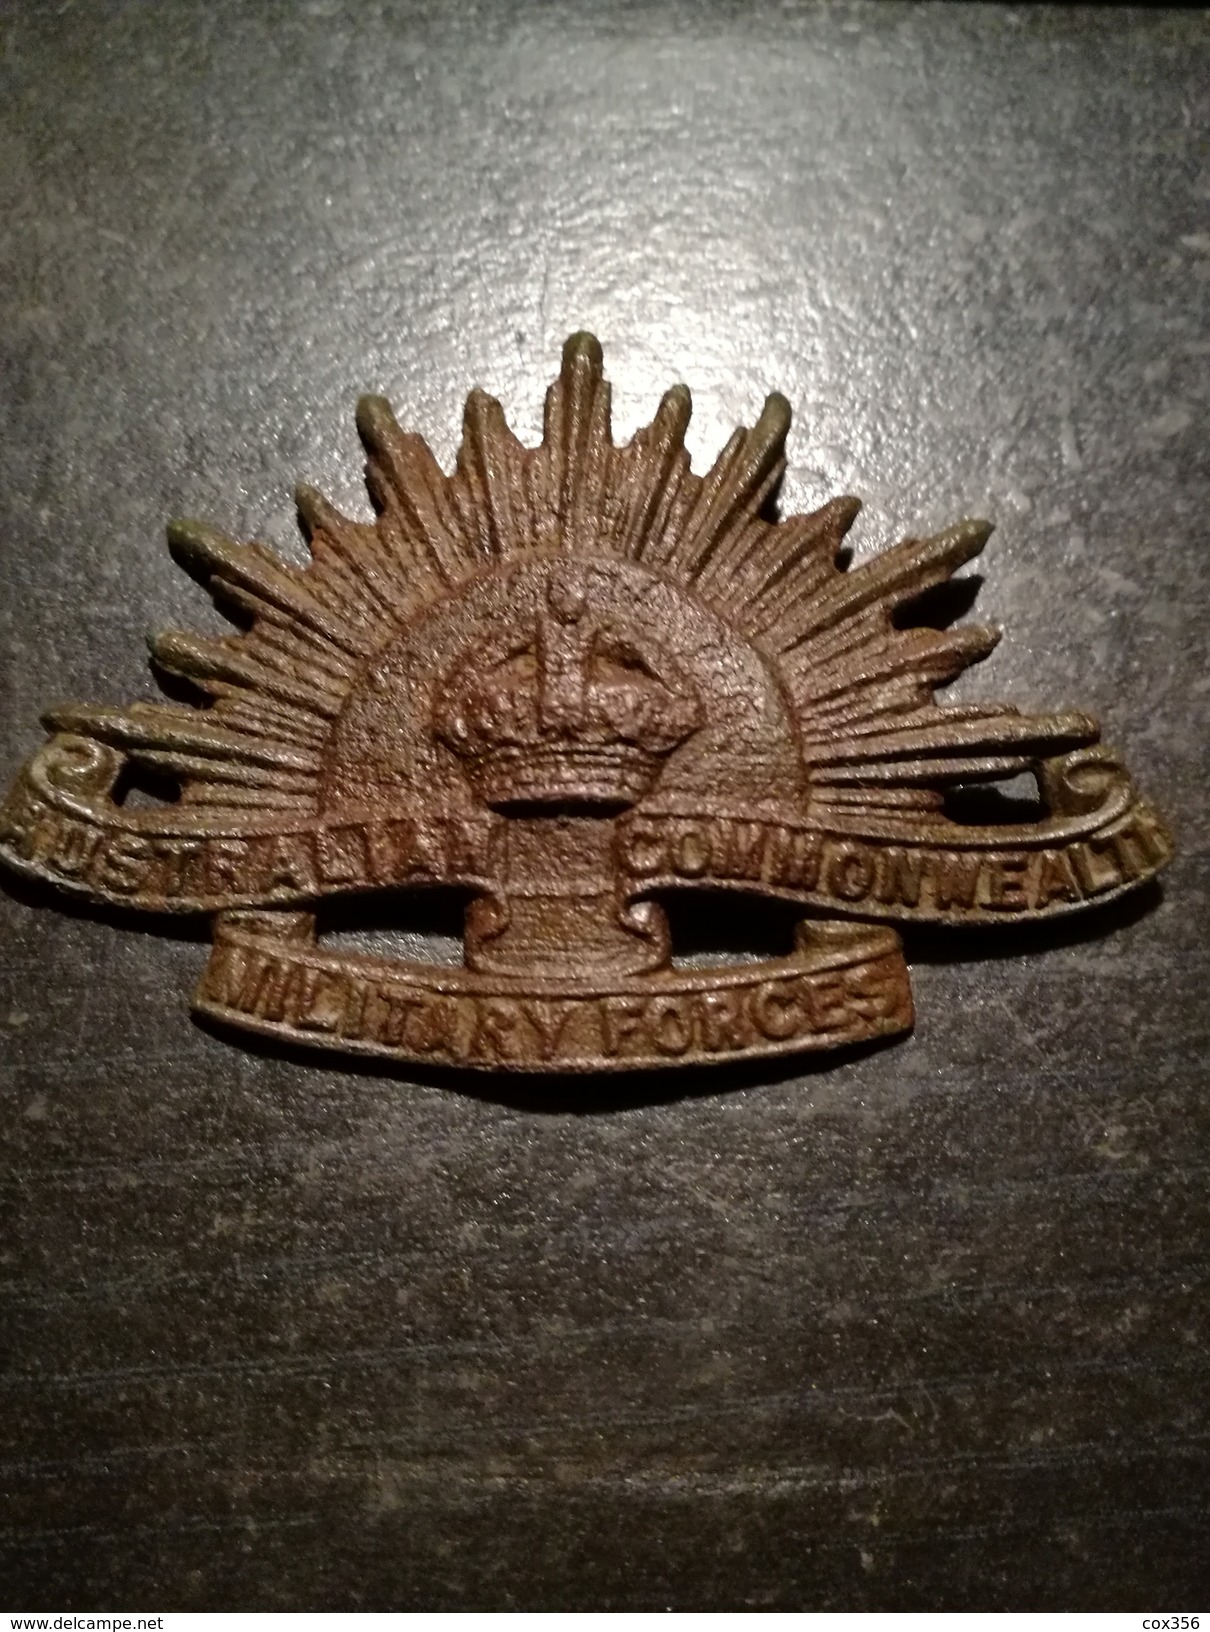 Badge Australian Commonwealth Military Forces Objet De Fouille - Groot-Brittannië